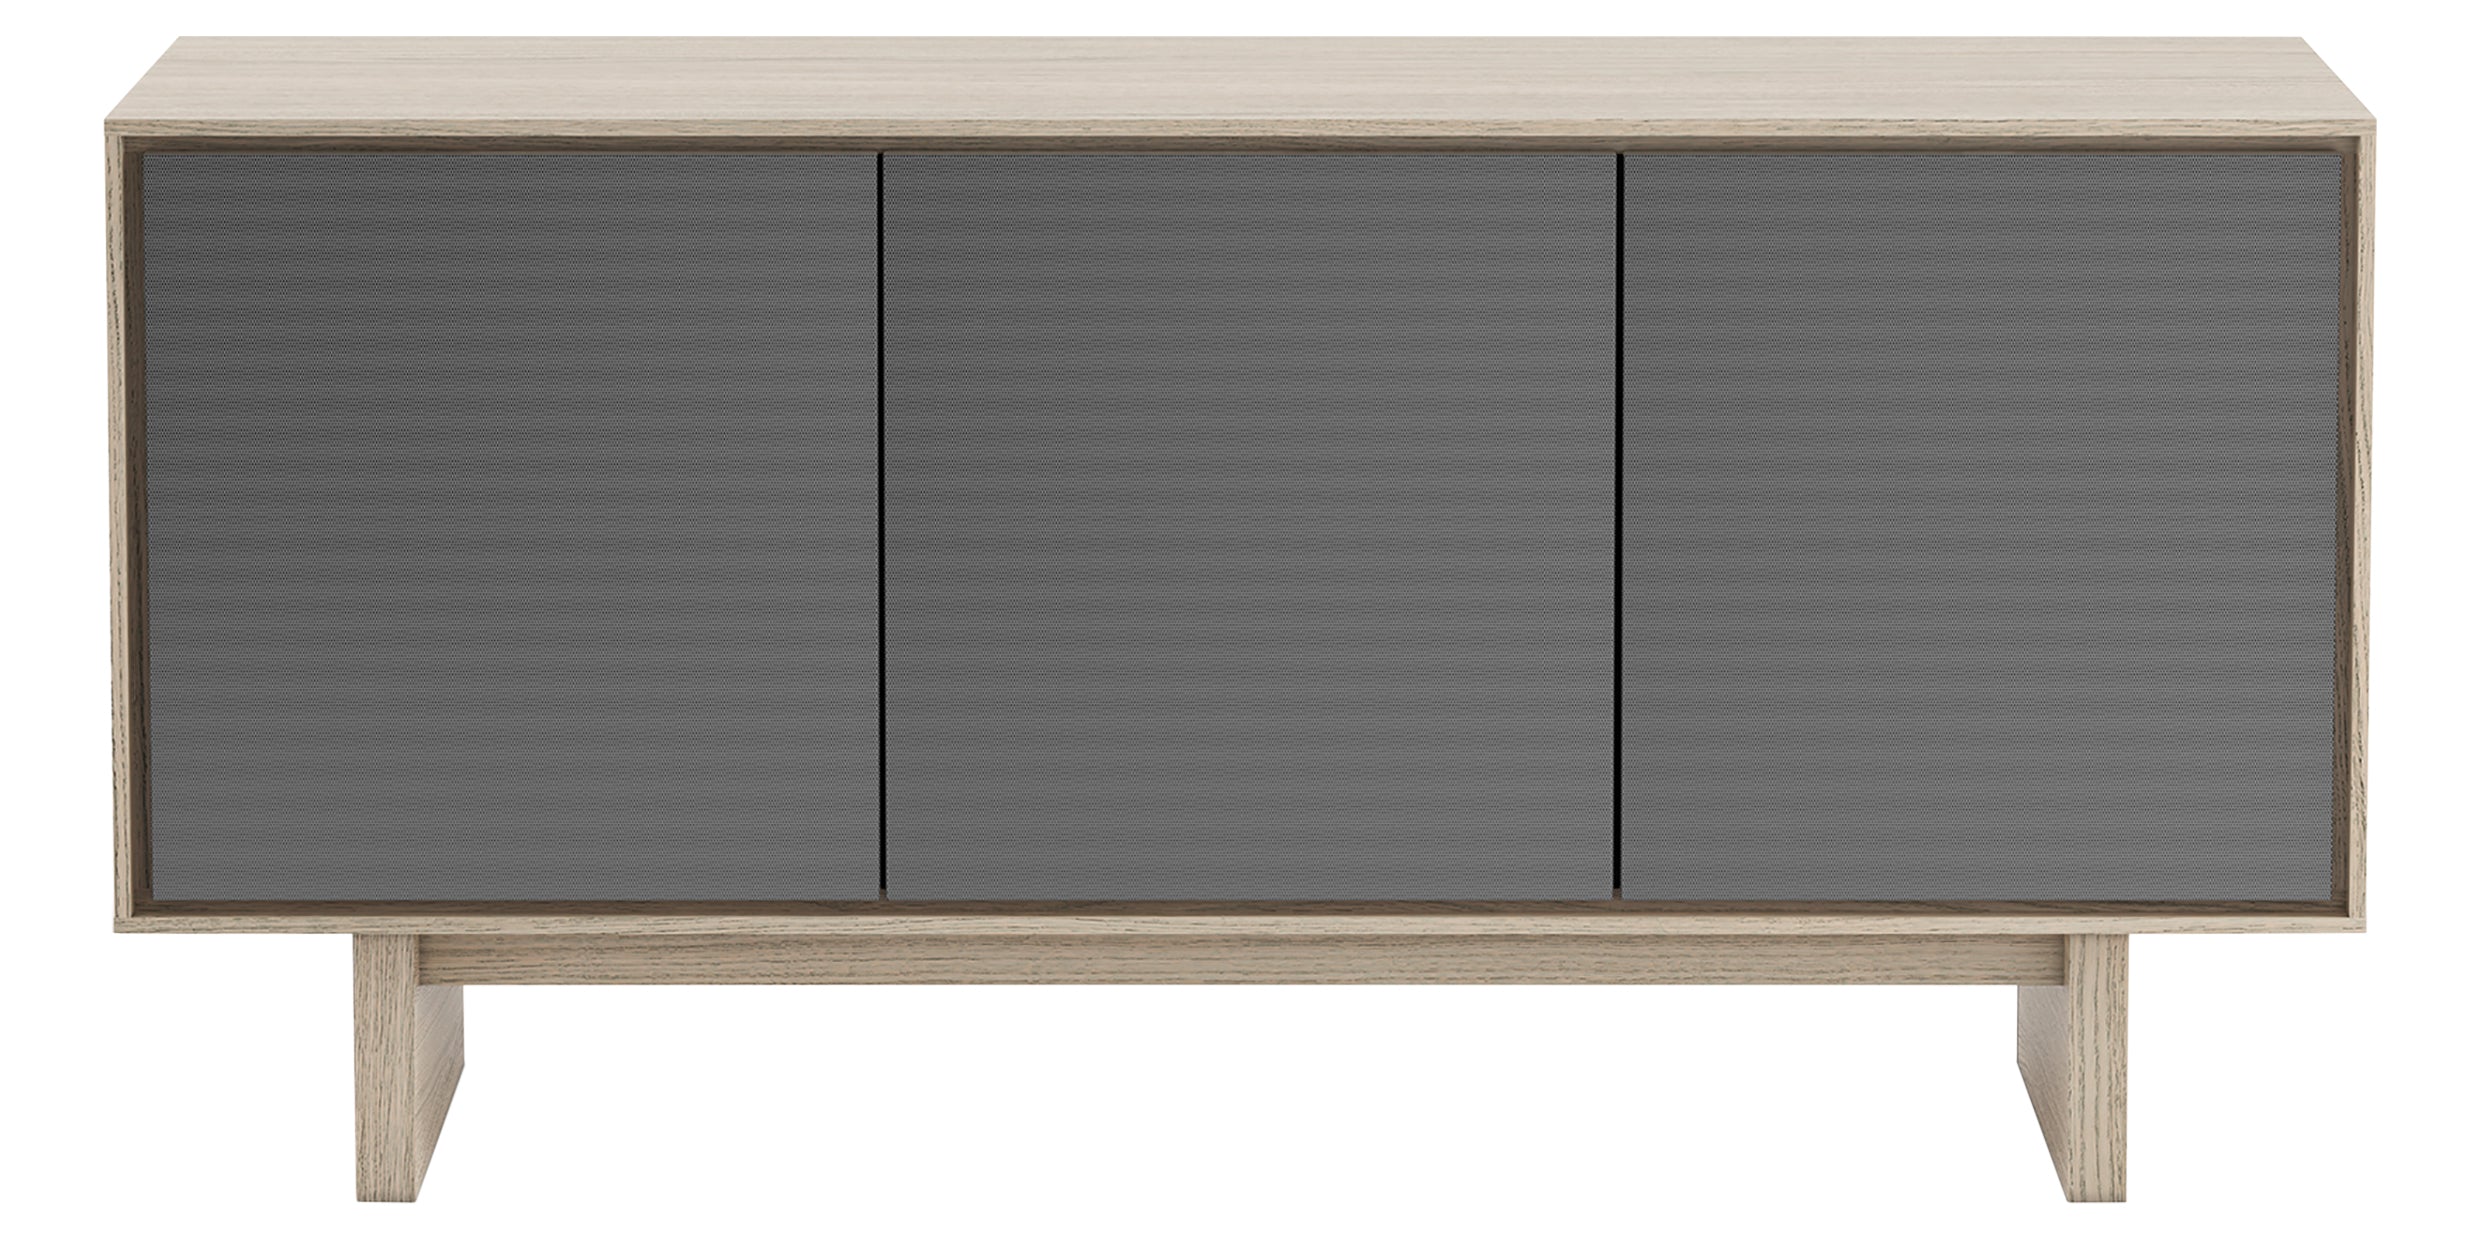 Drift Oak Veneer & Grey Perforated Steel | BDI Octave 3 Door Media Cabinet | Valley Ridge Furniture